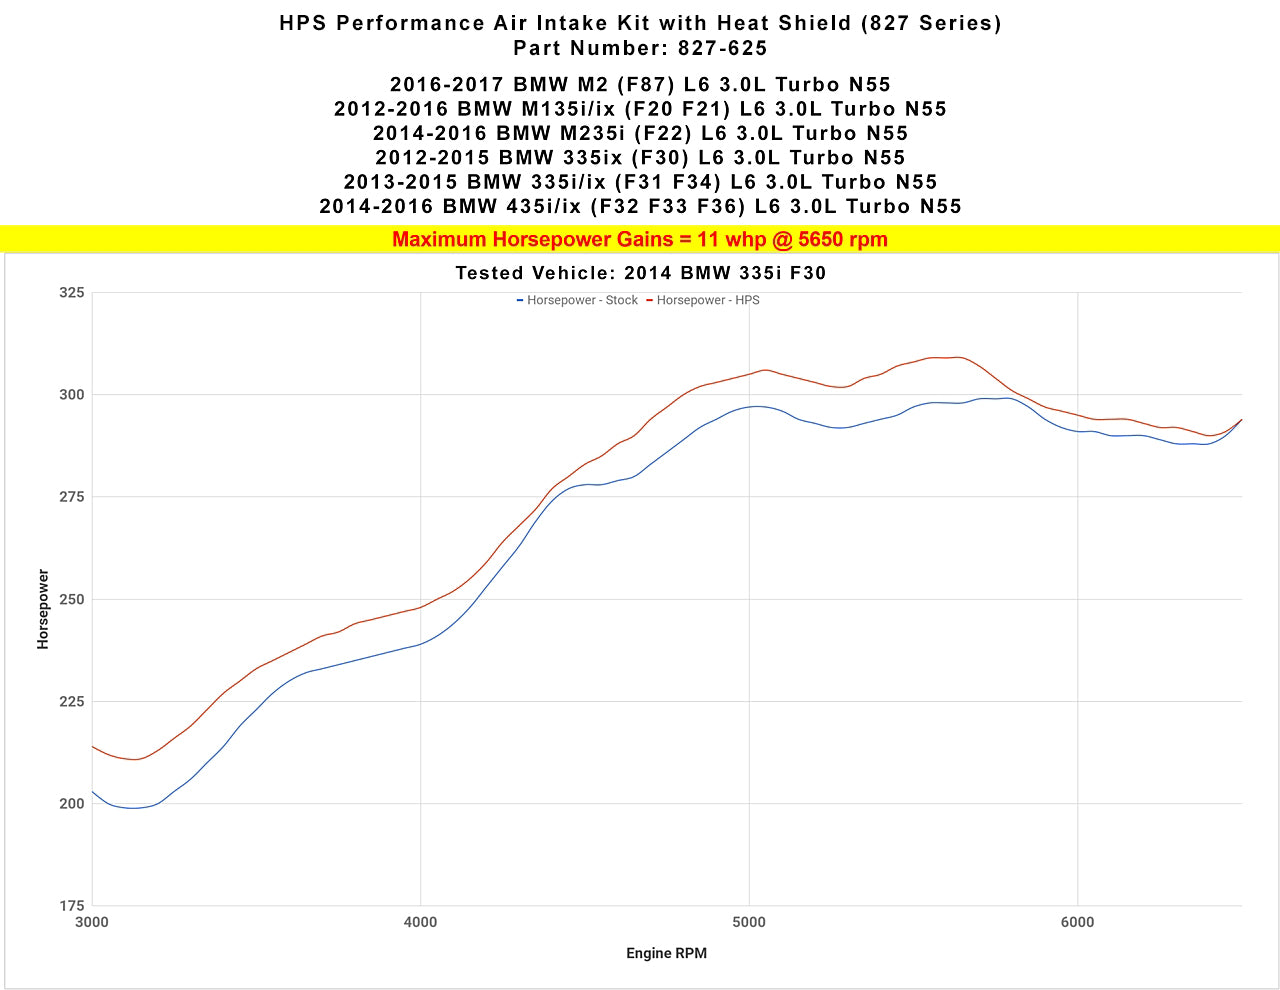 Dyno proven gains 11 whp HPS Performance Shortram Air Intake Kit 2014-2016 BMW 435i 435ix F32 F33 F36 3.0L Turbo N55 827-625WB